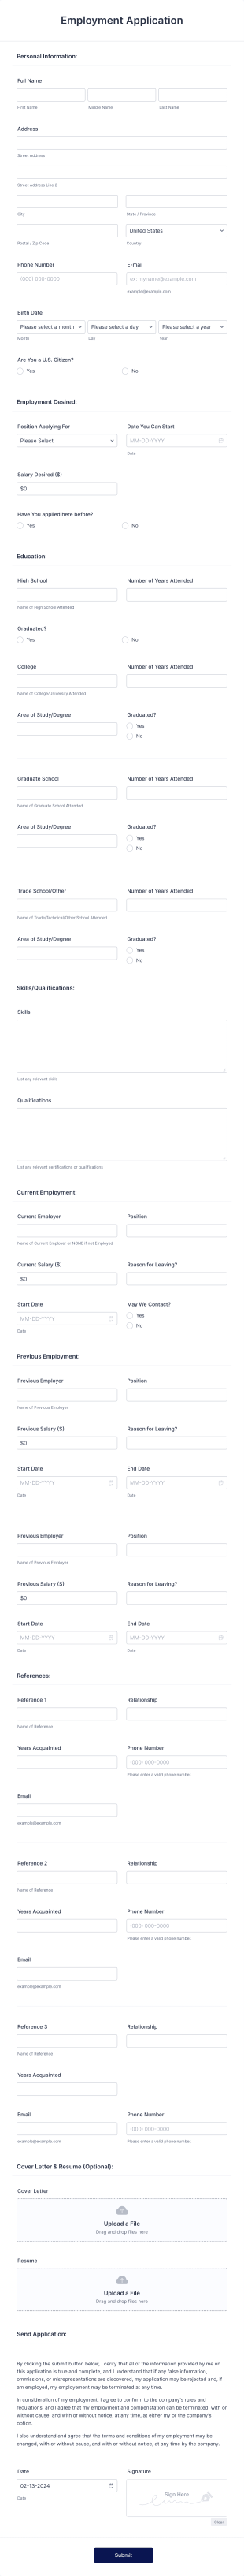 Recruitment Application Form Template